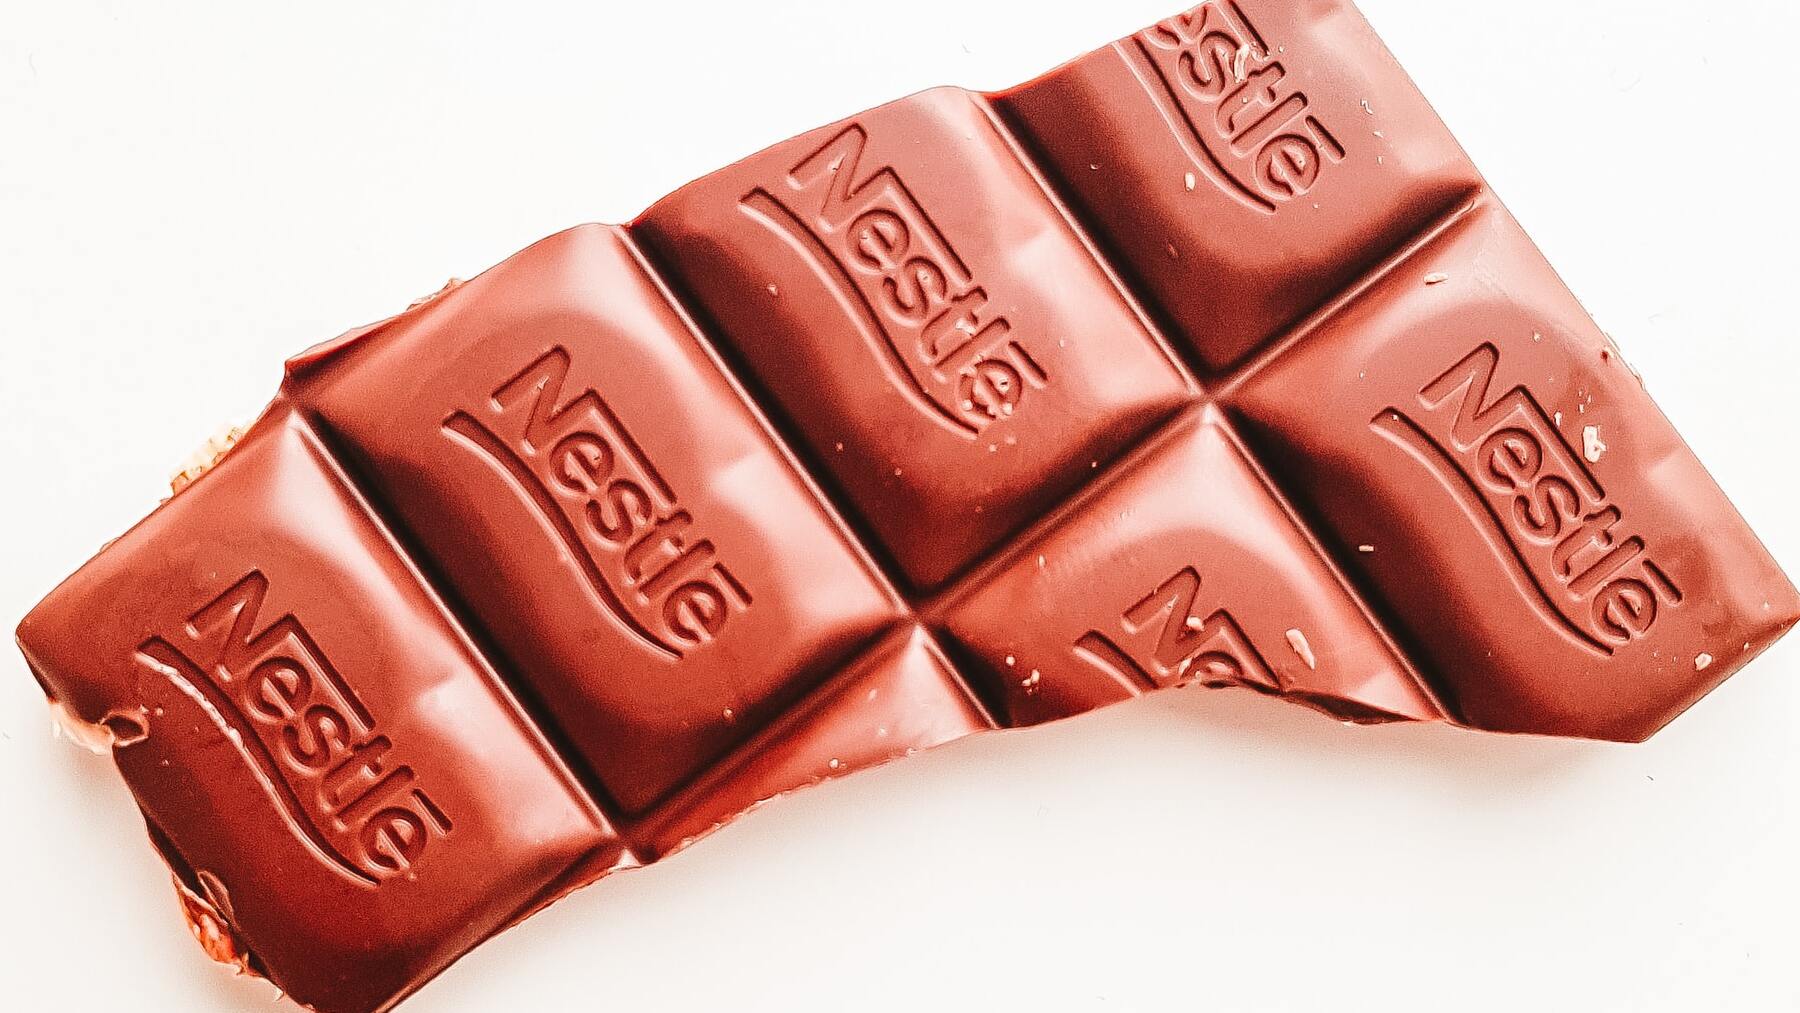 Tableta de chocolate Nestlé